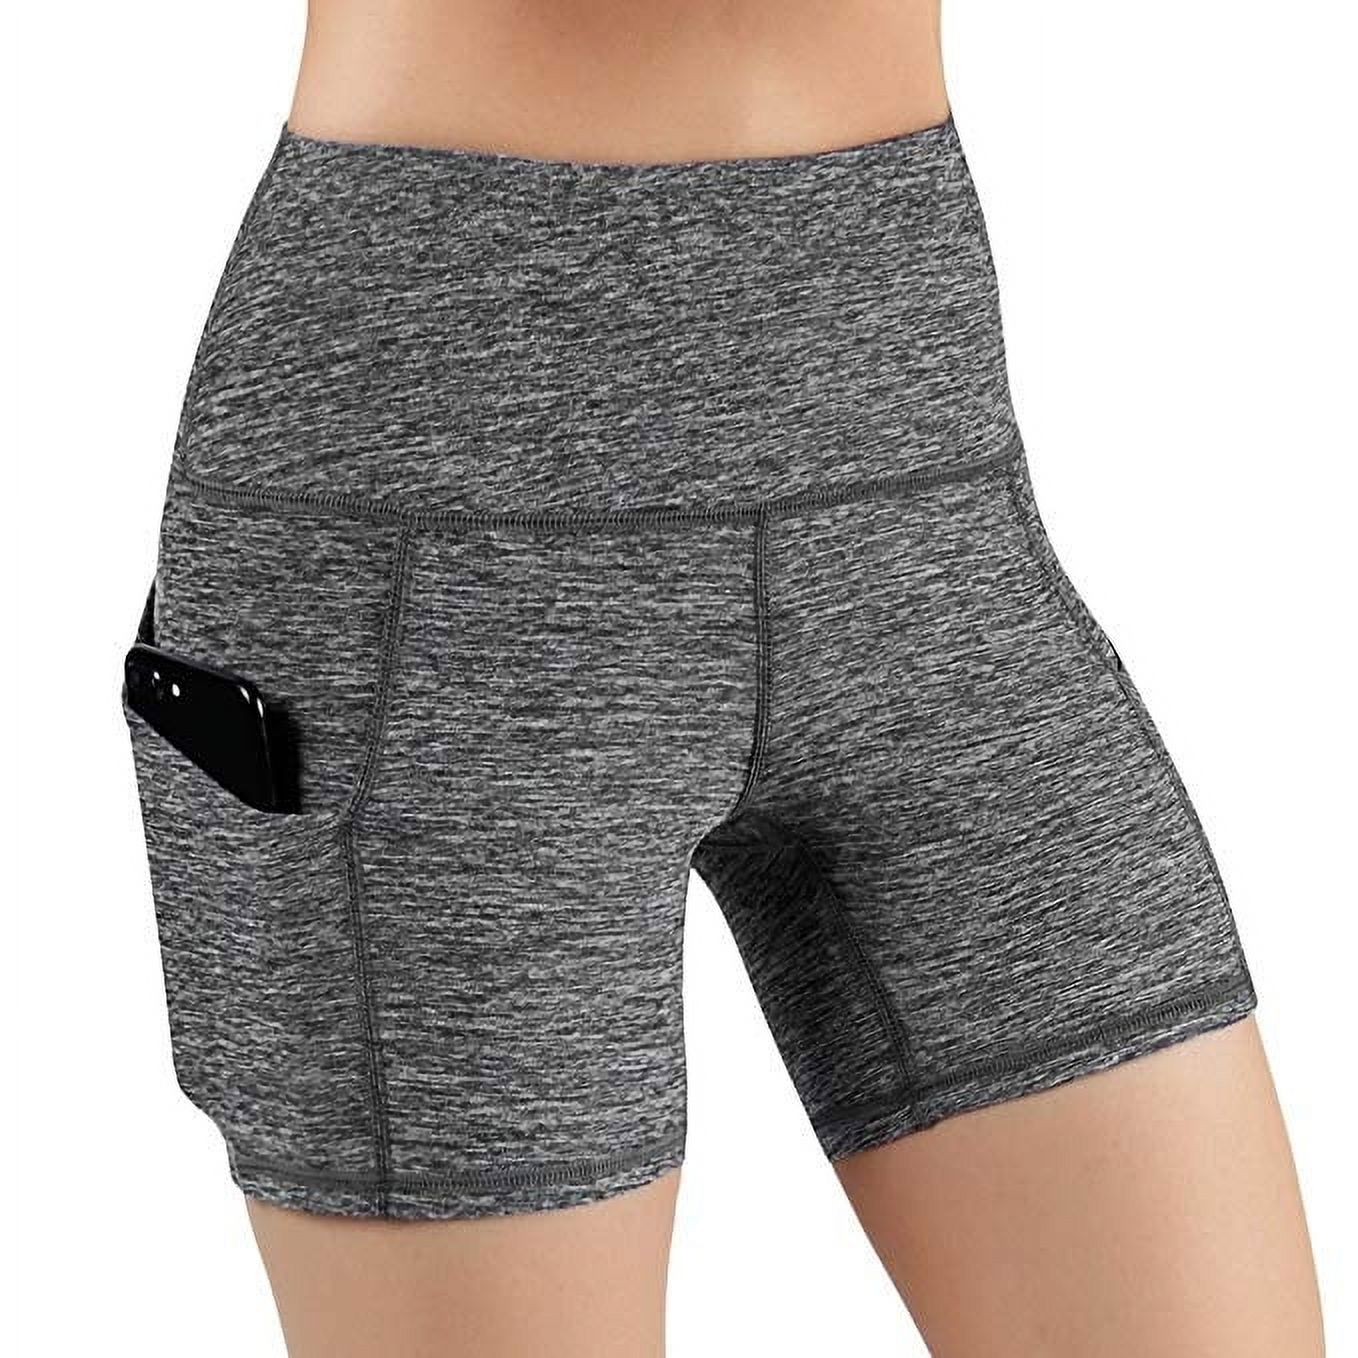 Tuscom Yoga Pants Lady Solid Pocket High-Waist Hip Stretch Underpants Running Fitness Yoga Shorts - image 1 of 1